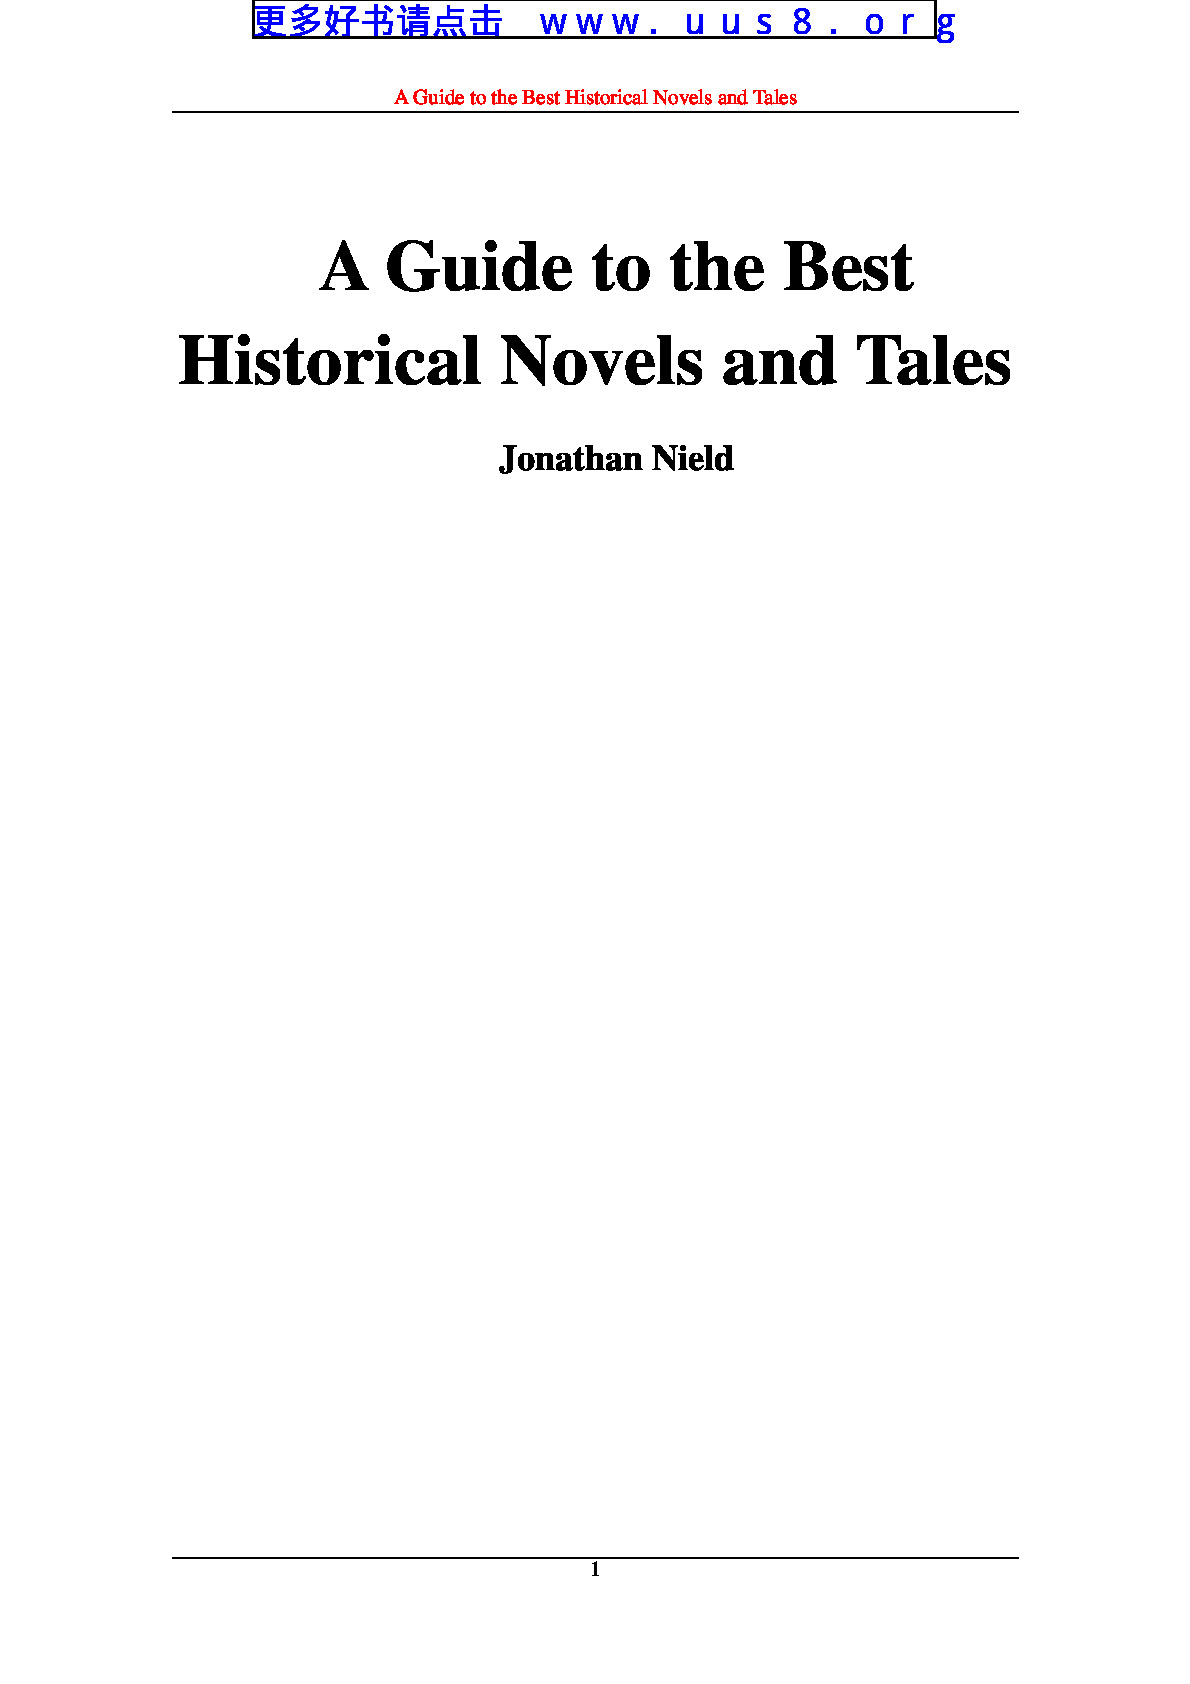 best_historical_novels_and_tales(乔纳森尼尔德历史小说故事精选)